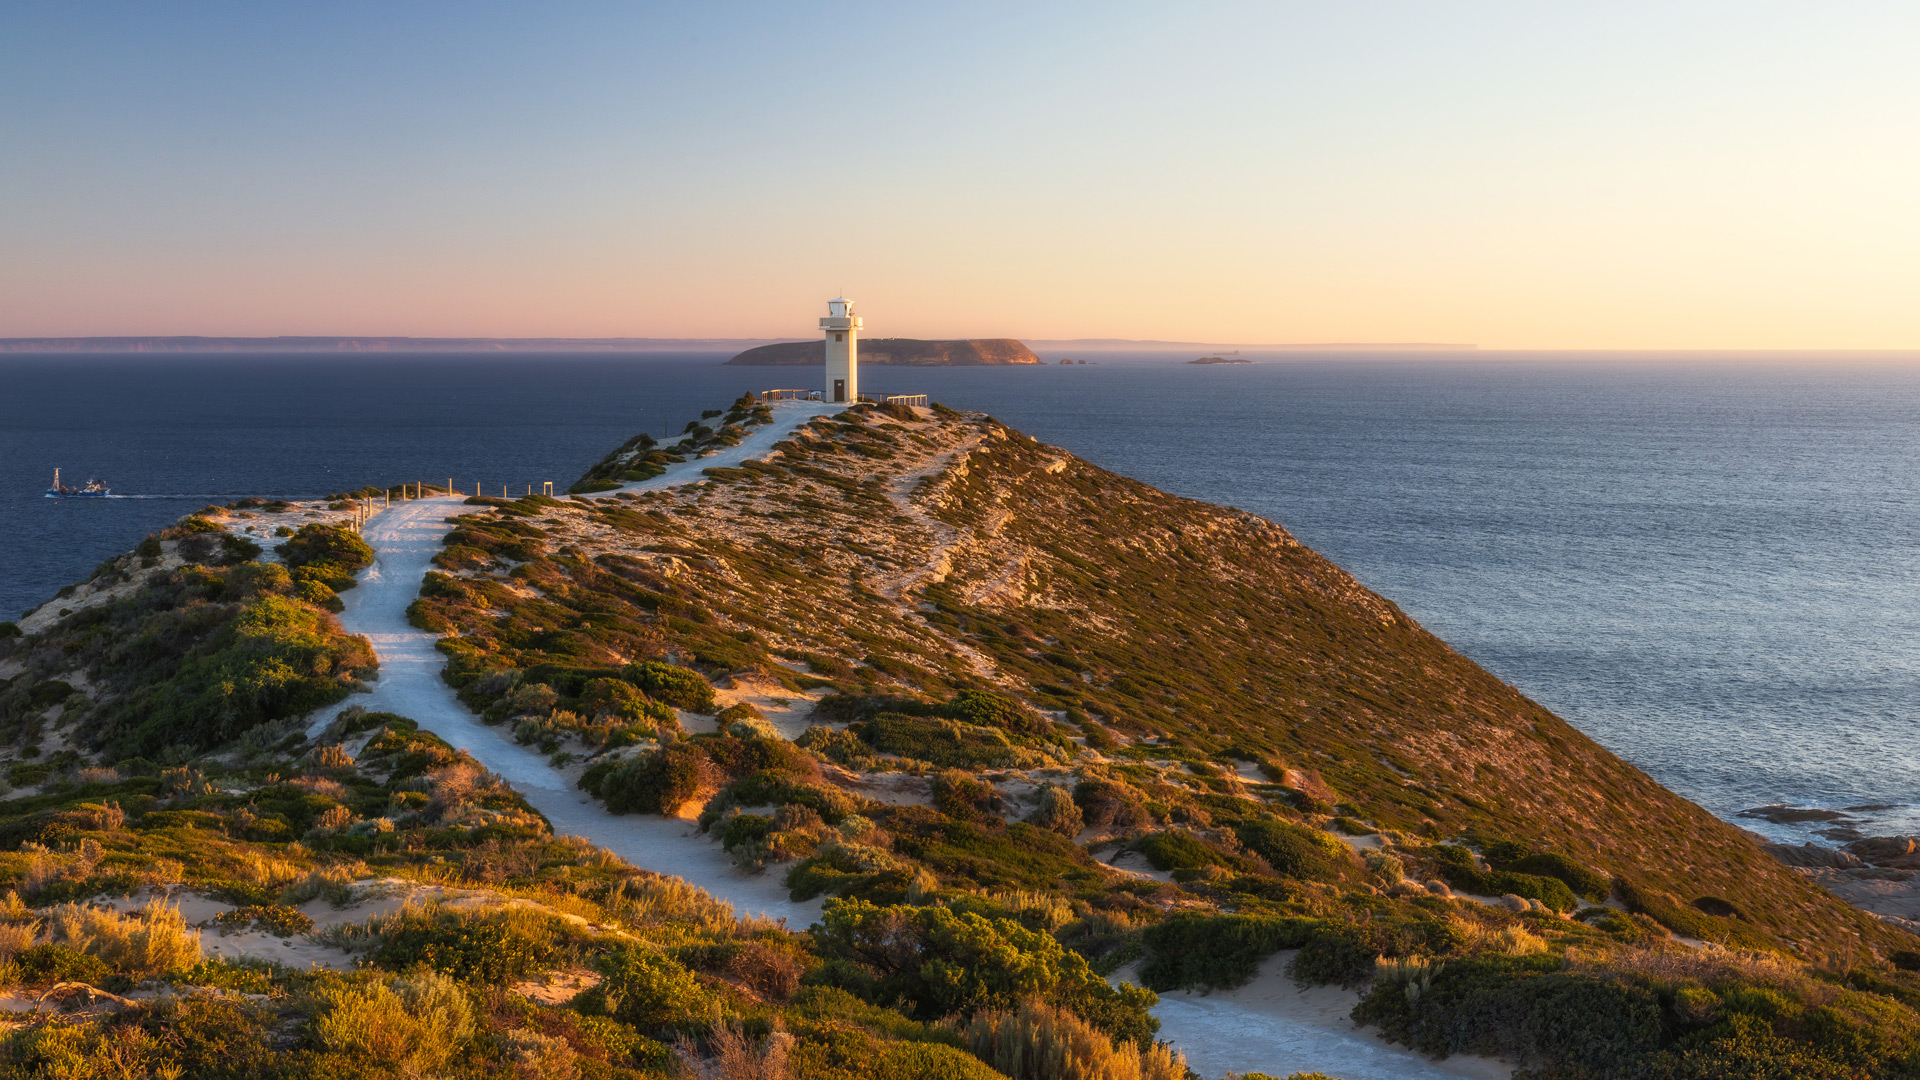 Cape Spencer Lighthouse